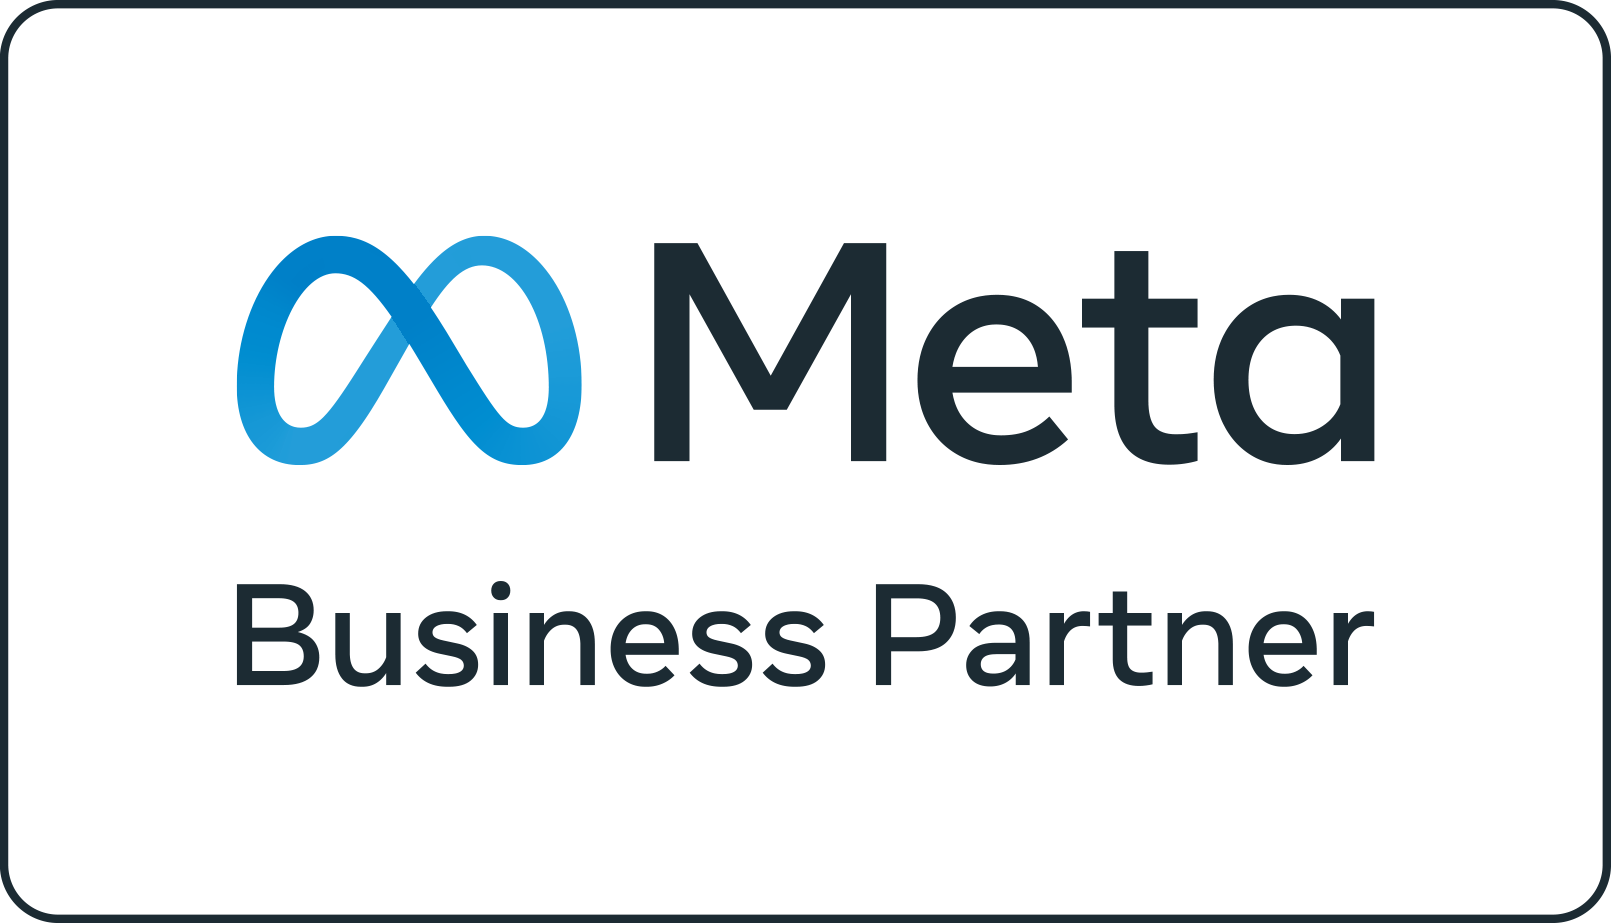 Logo Meta Business Partner